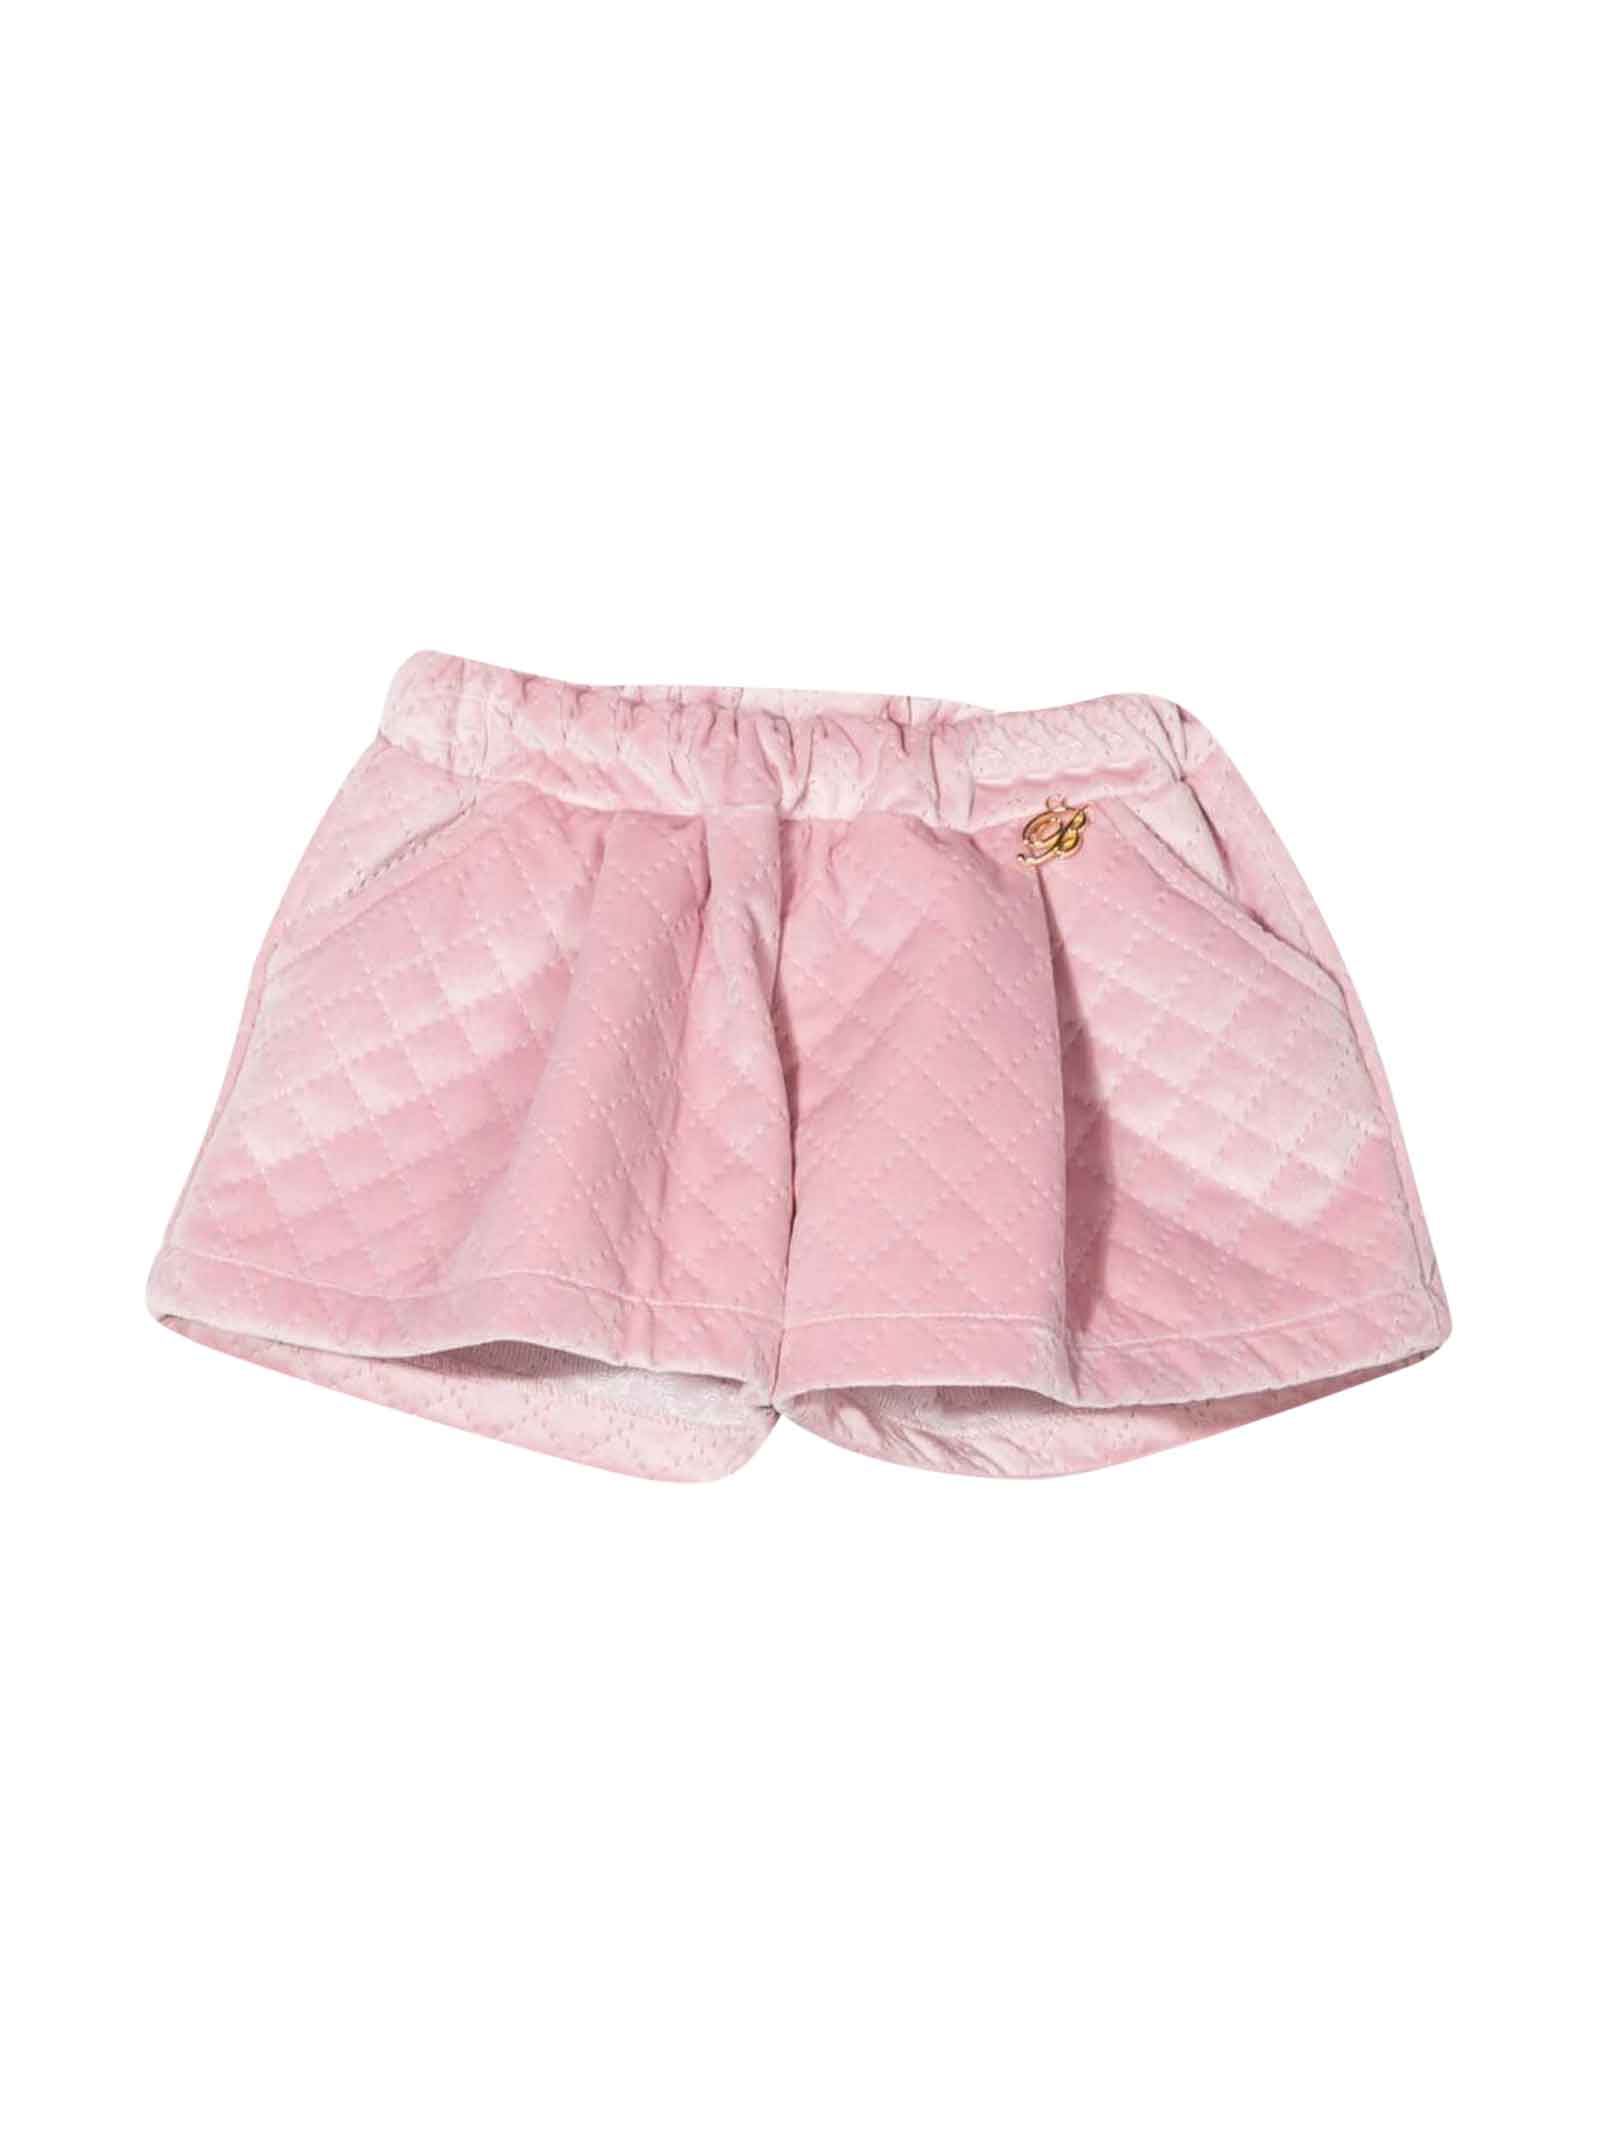 Miss Blumarine Pink Shorts Baby Kids